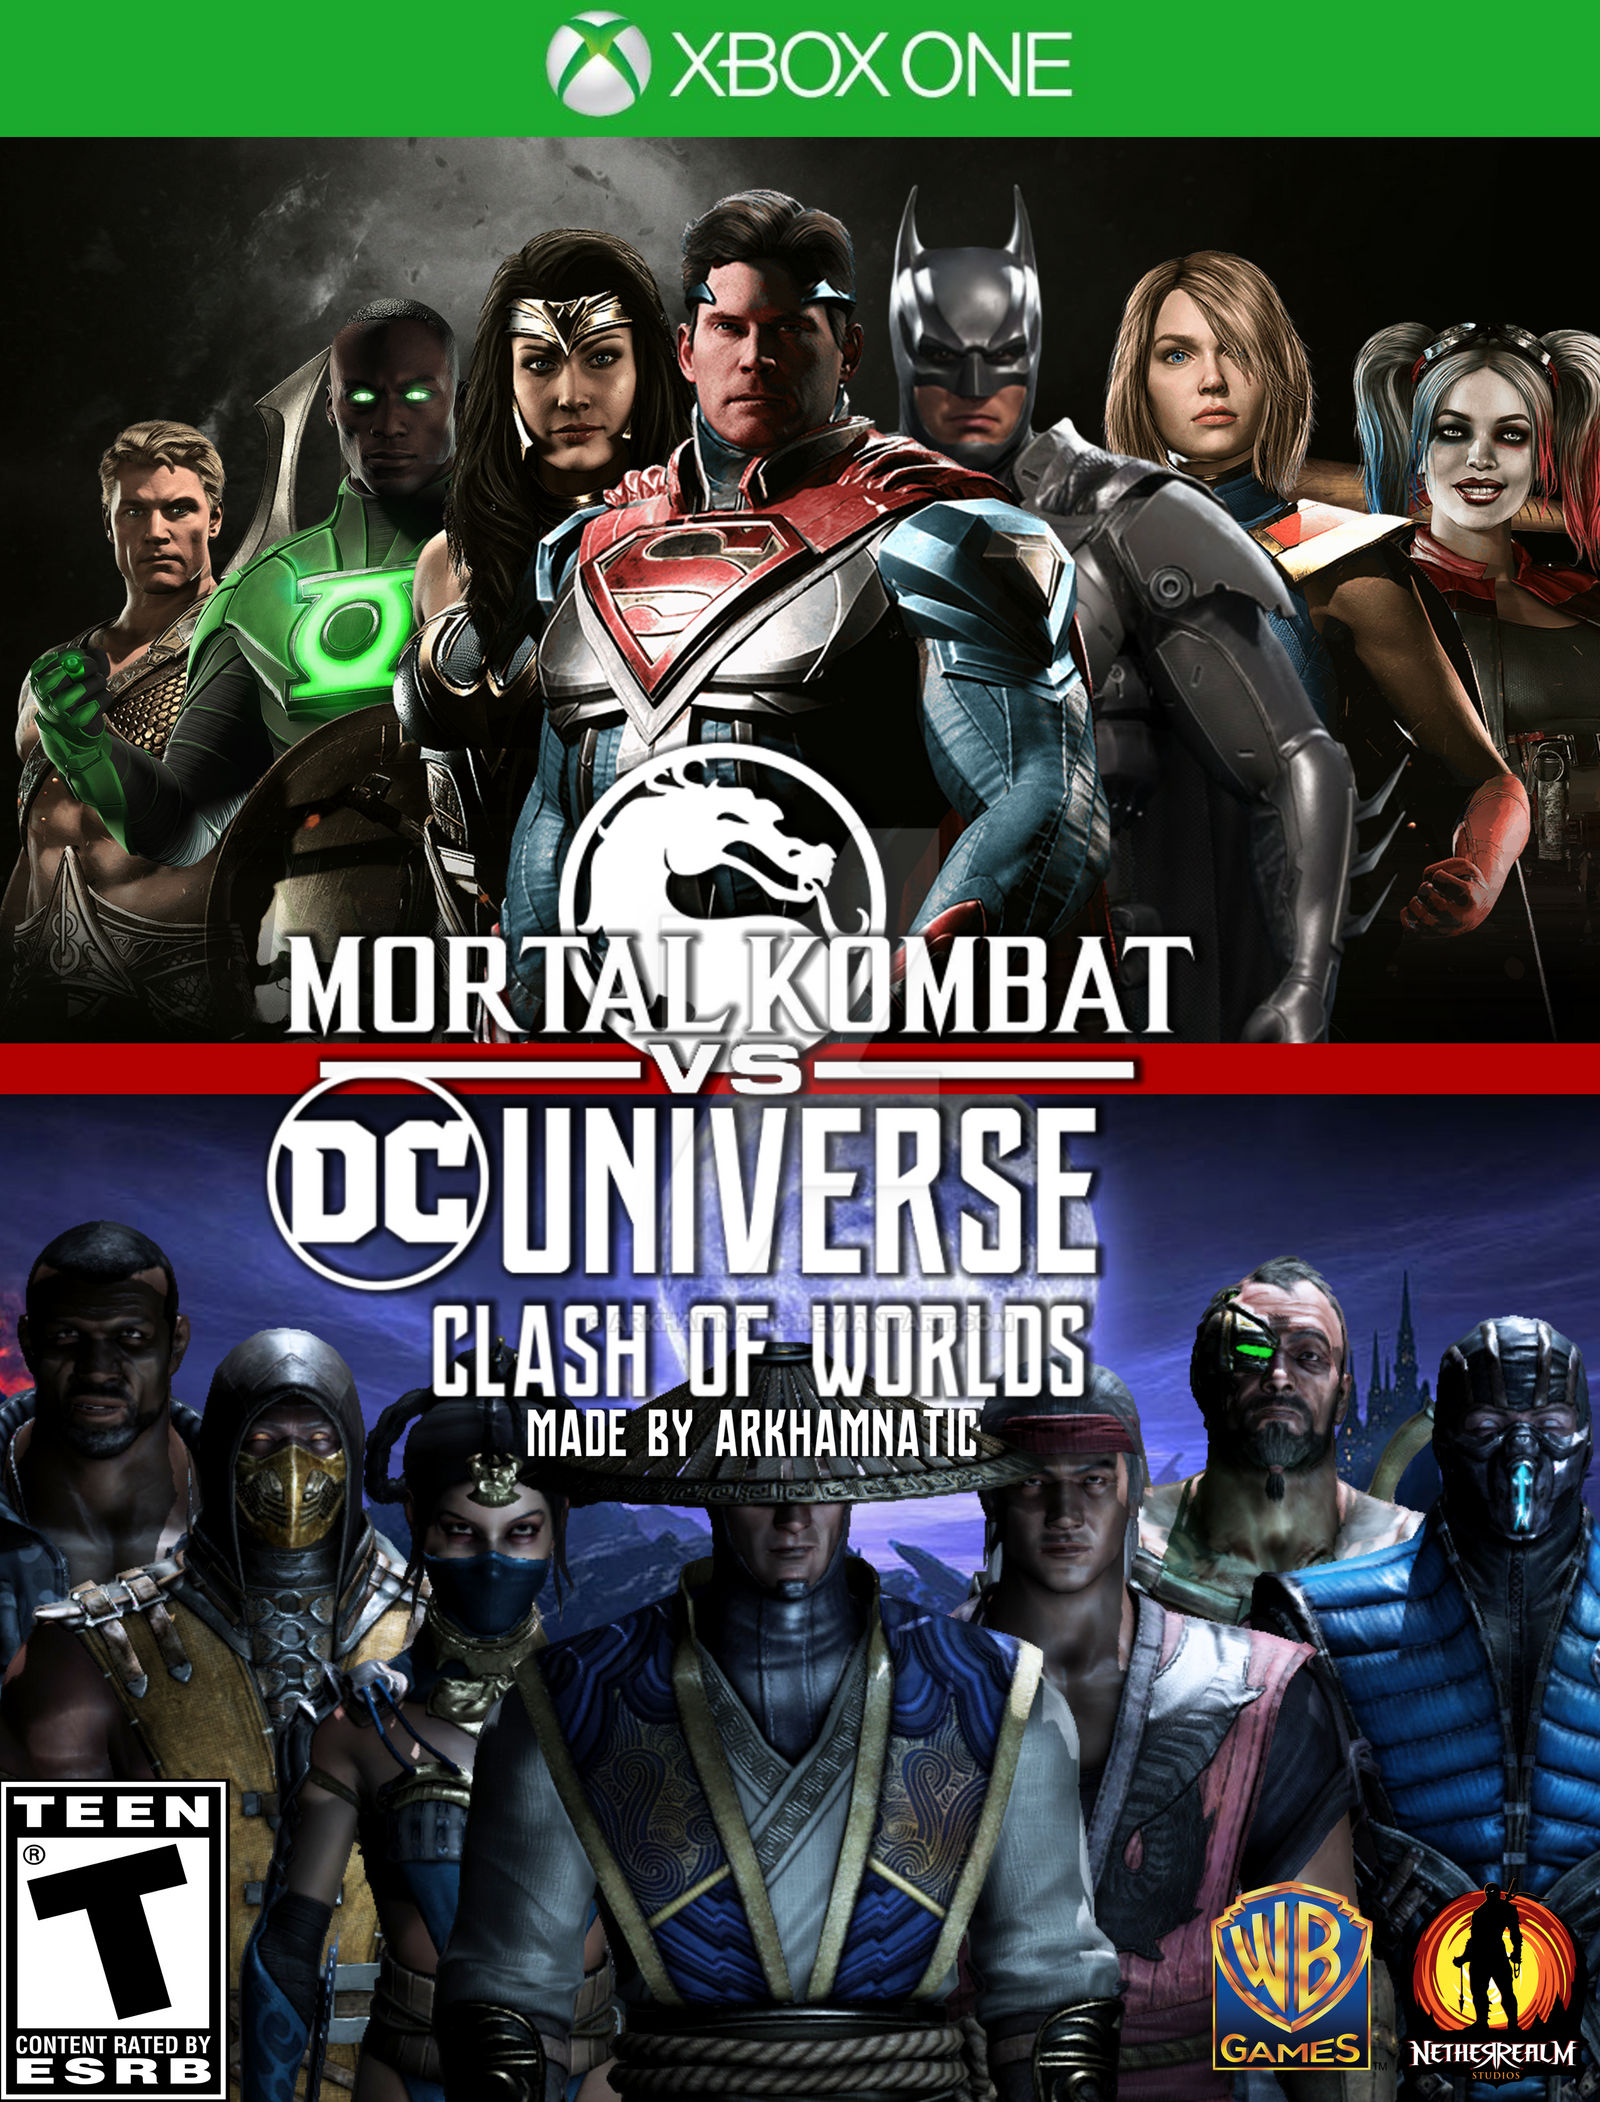 Mortal Kombat vs DC Universe: Clash of Worlds by ArkhamNatic on DeviantArt